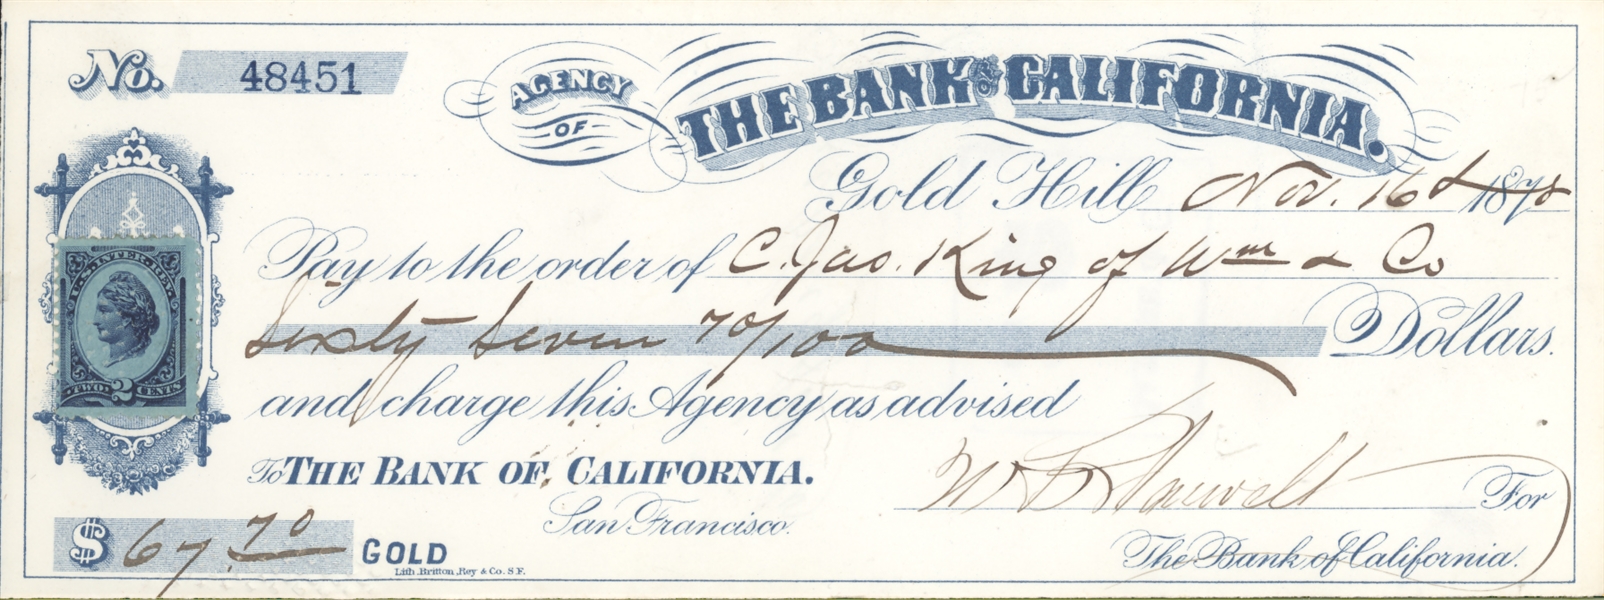 [San Francisco, California] James King of William signed check